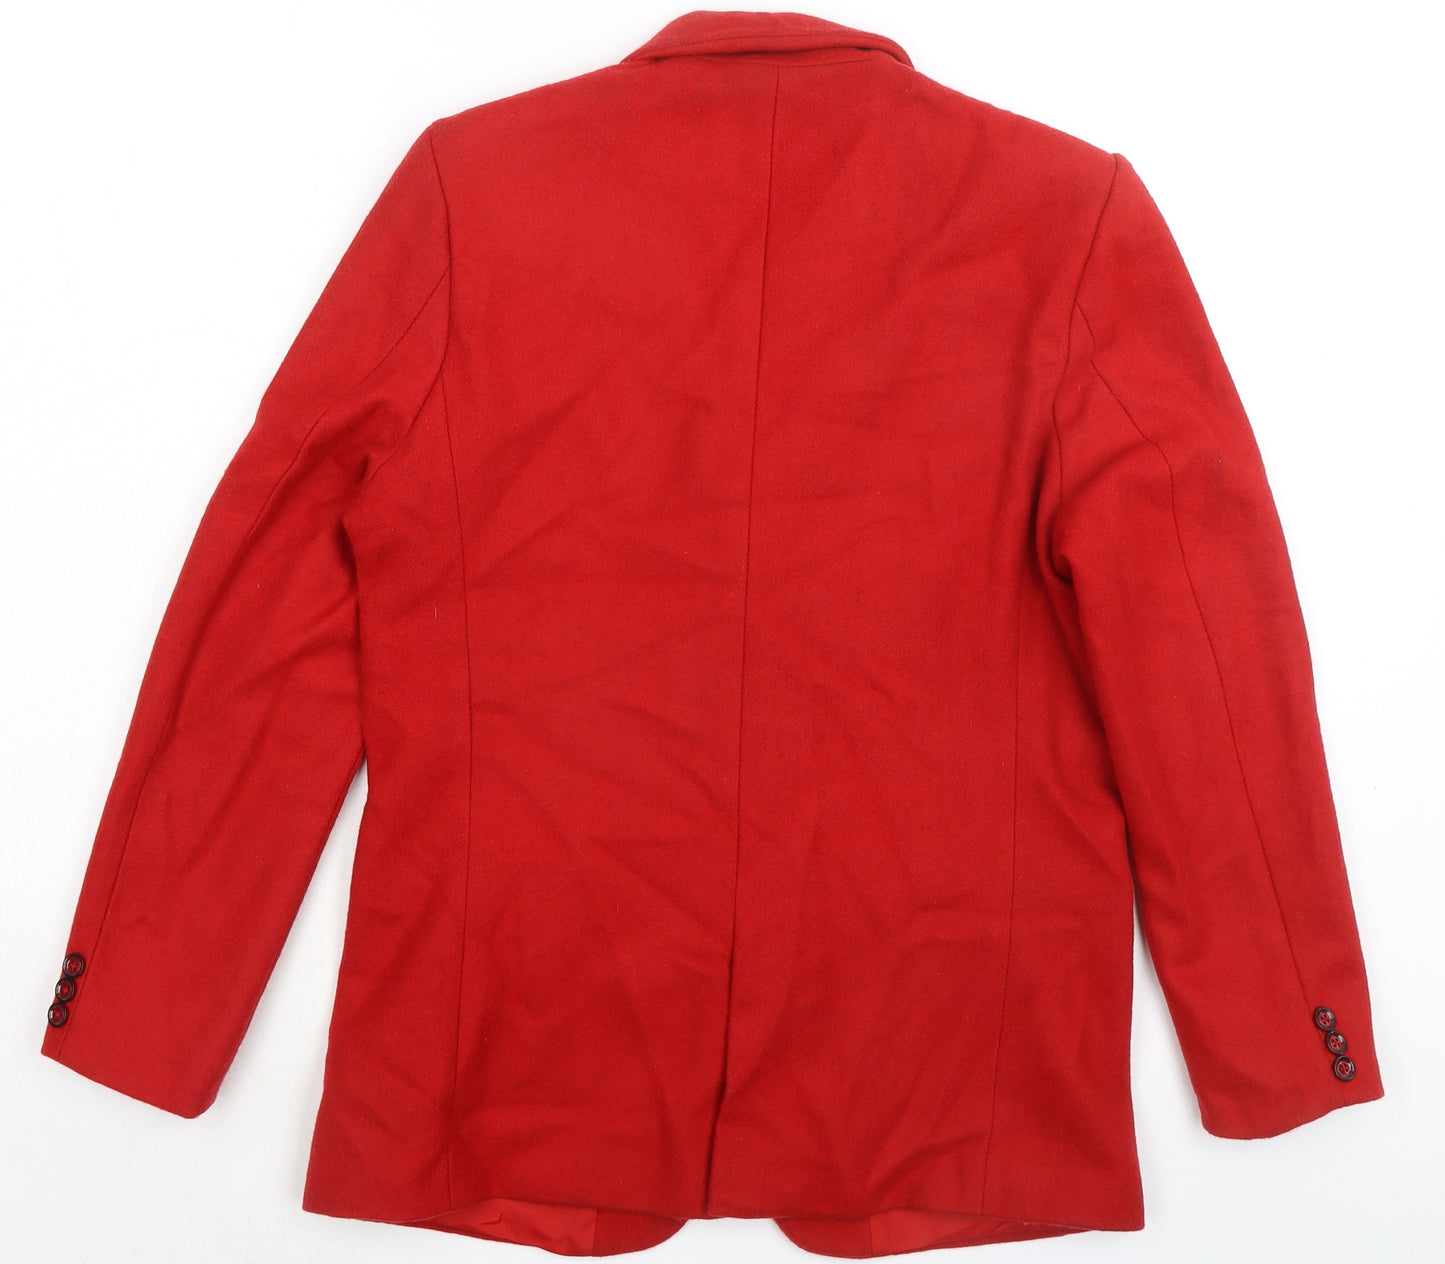 Alice Collins Womens Red Jacket Blazer Size 10 Button